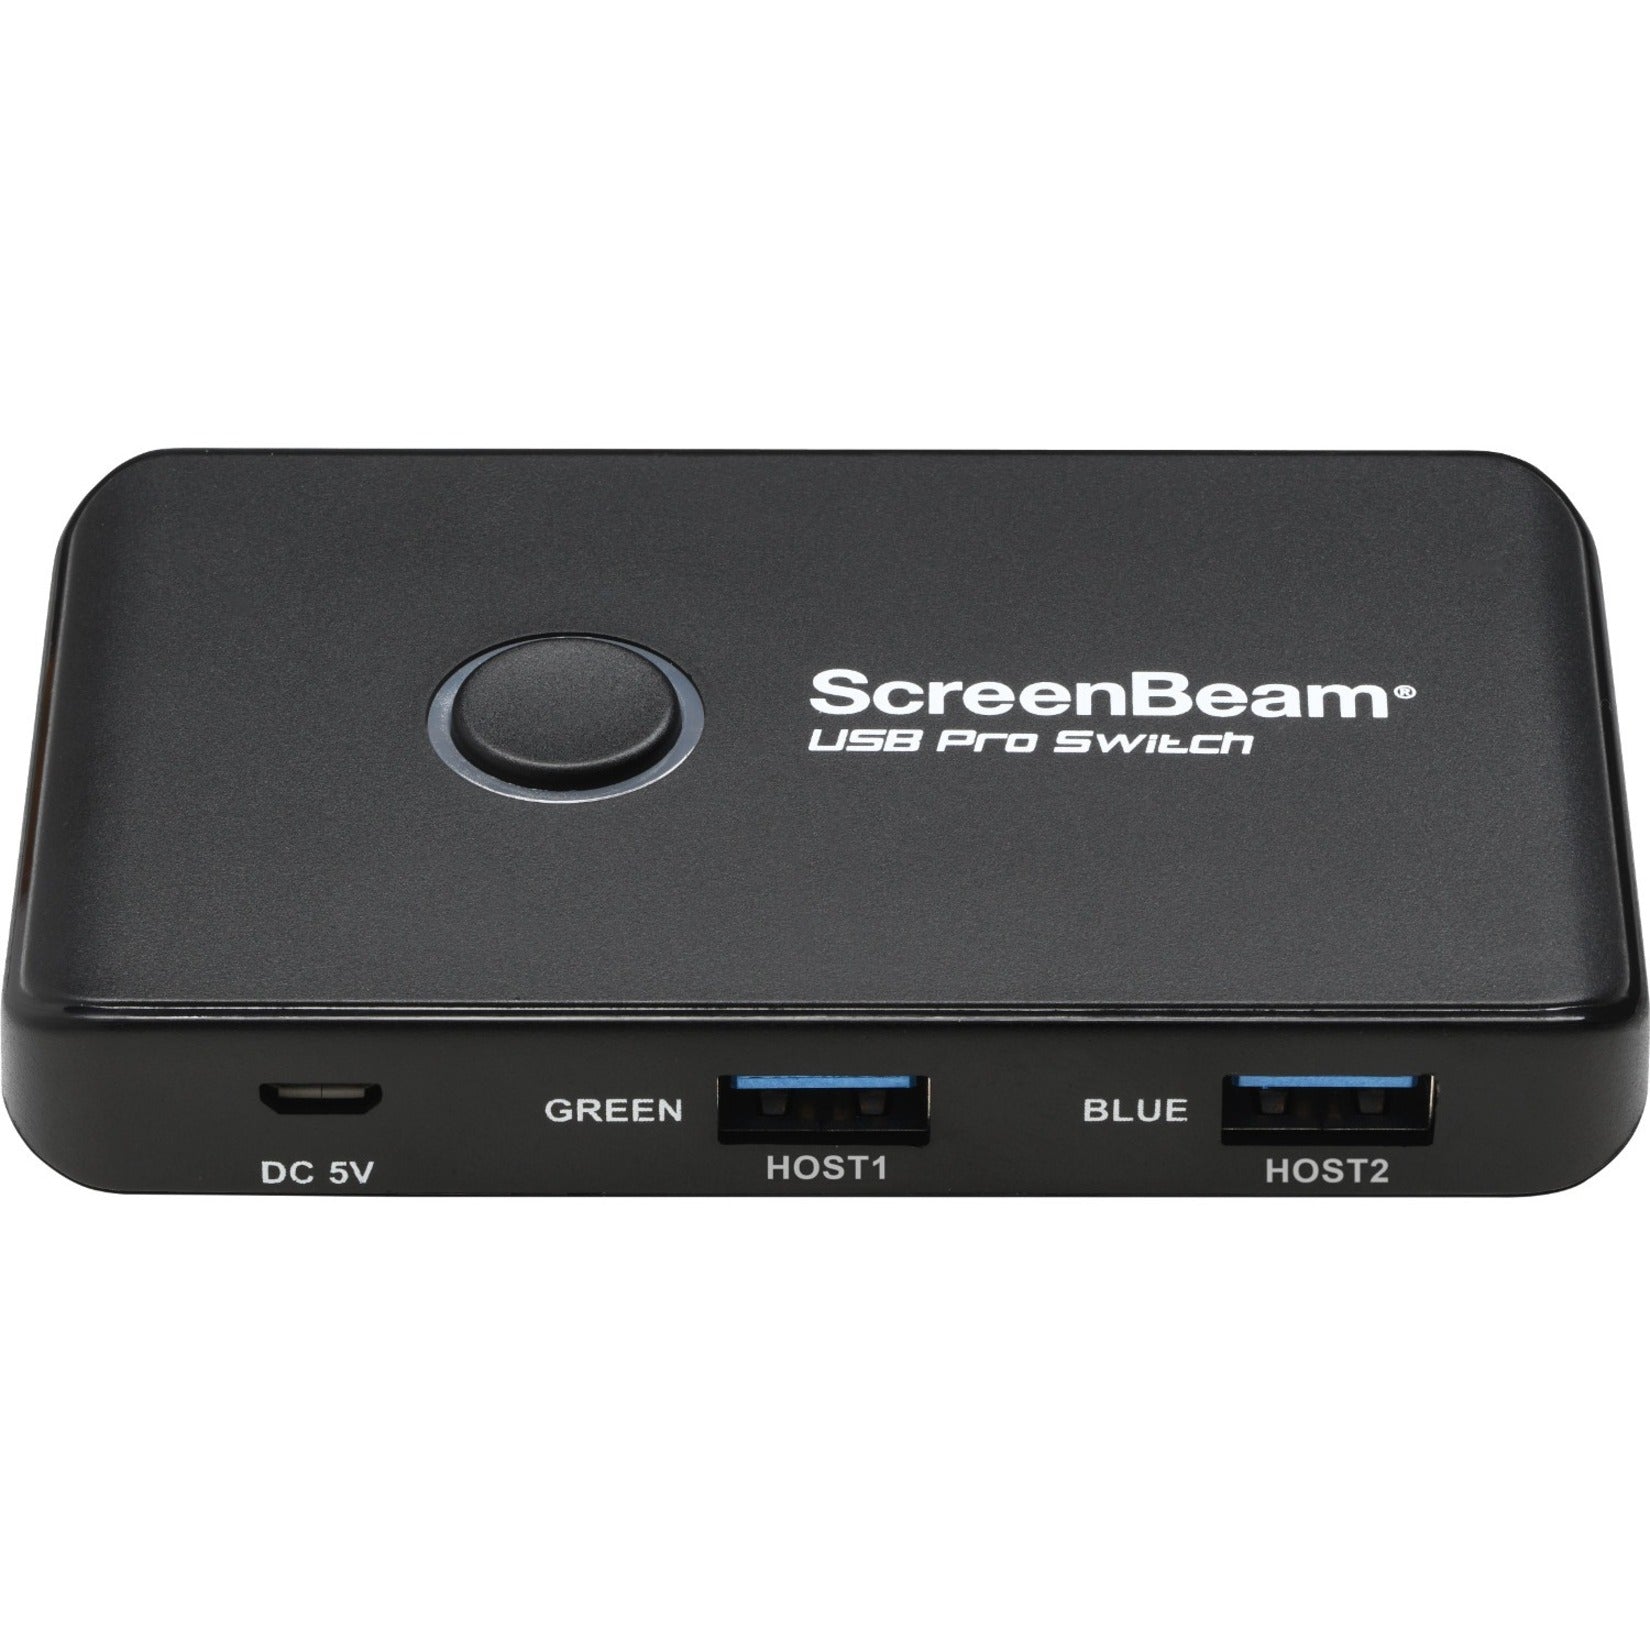 ScreenBeam SBUSBSW4 USB Pro Switch, 2 Inputs 4 Outputs, 7 USB Ports